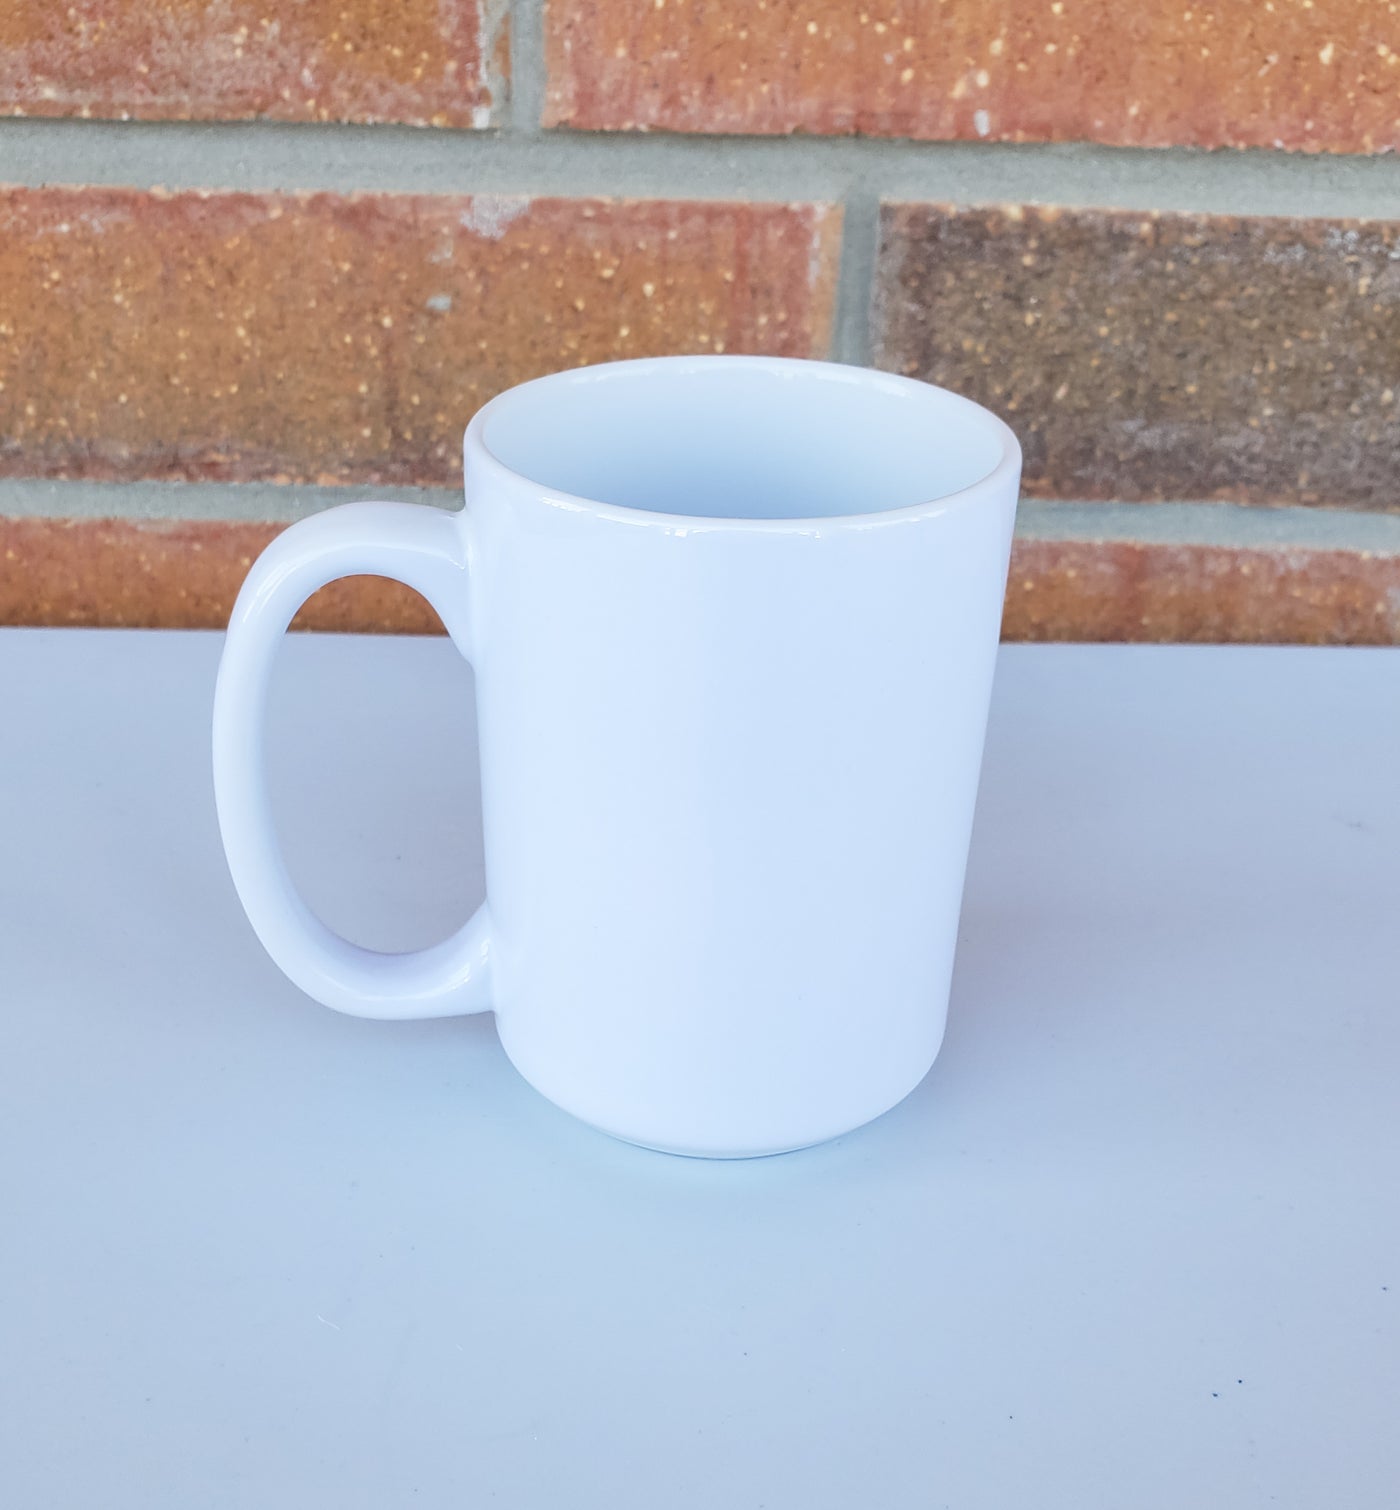 Custom Mug- Double Sided